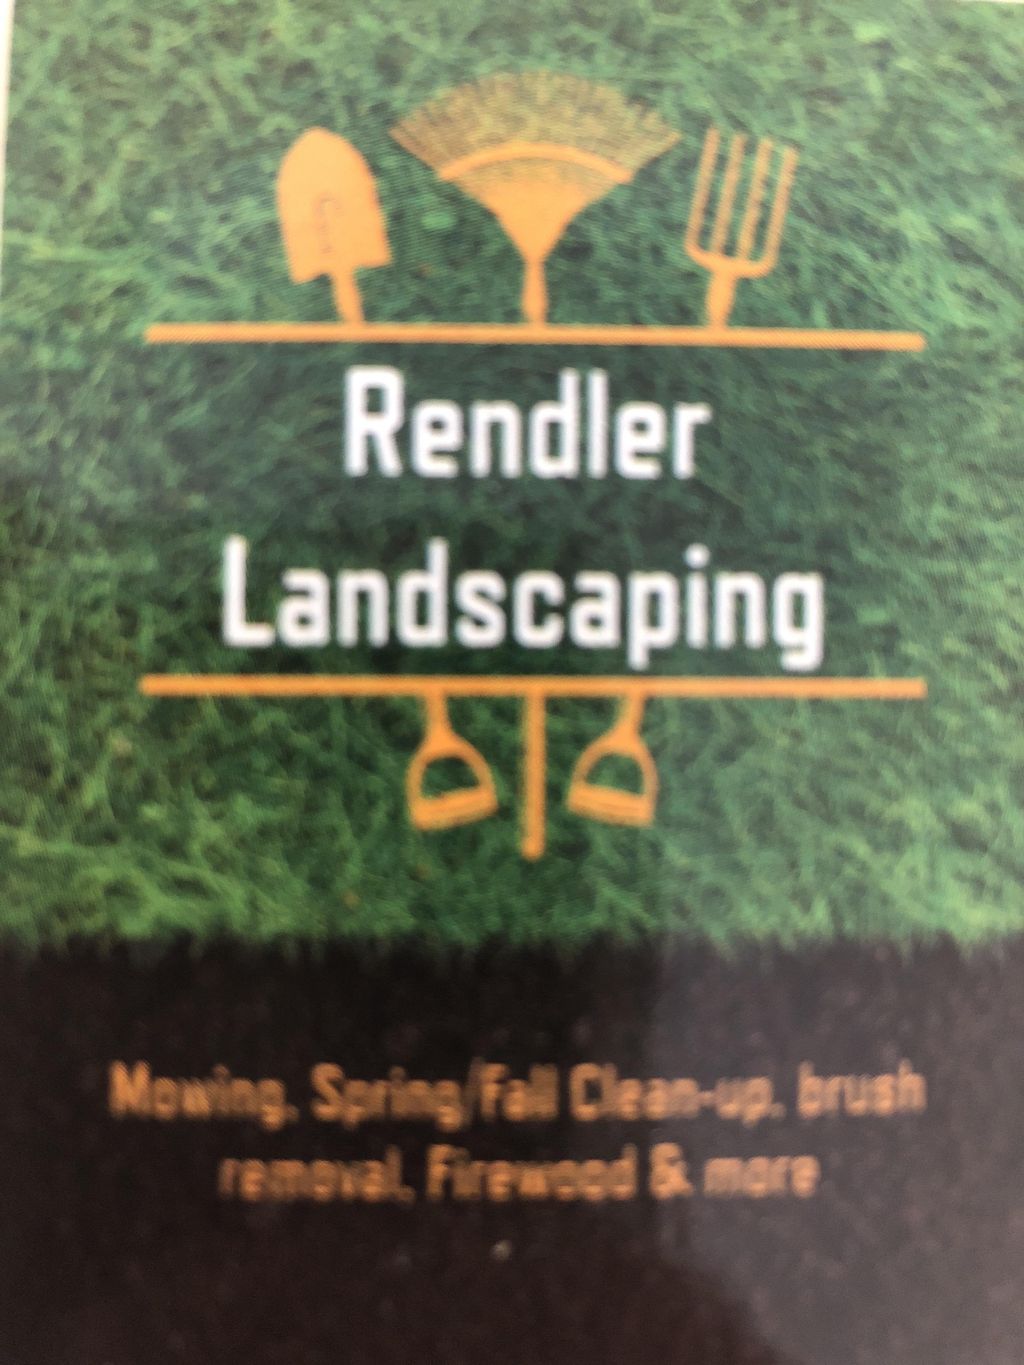 Rendler Landscaping